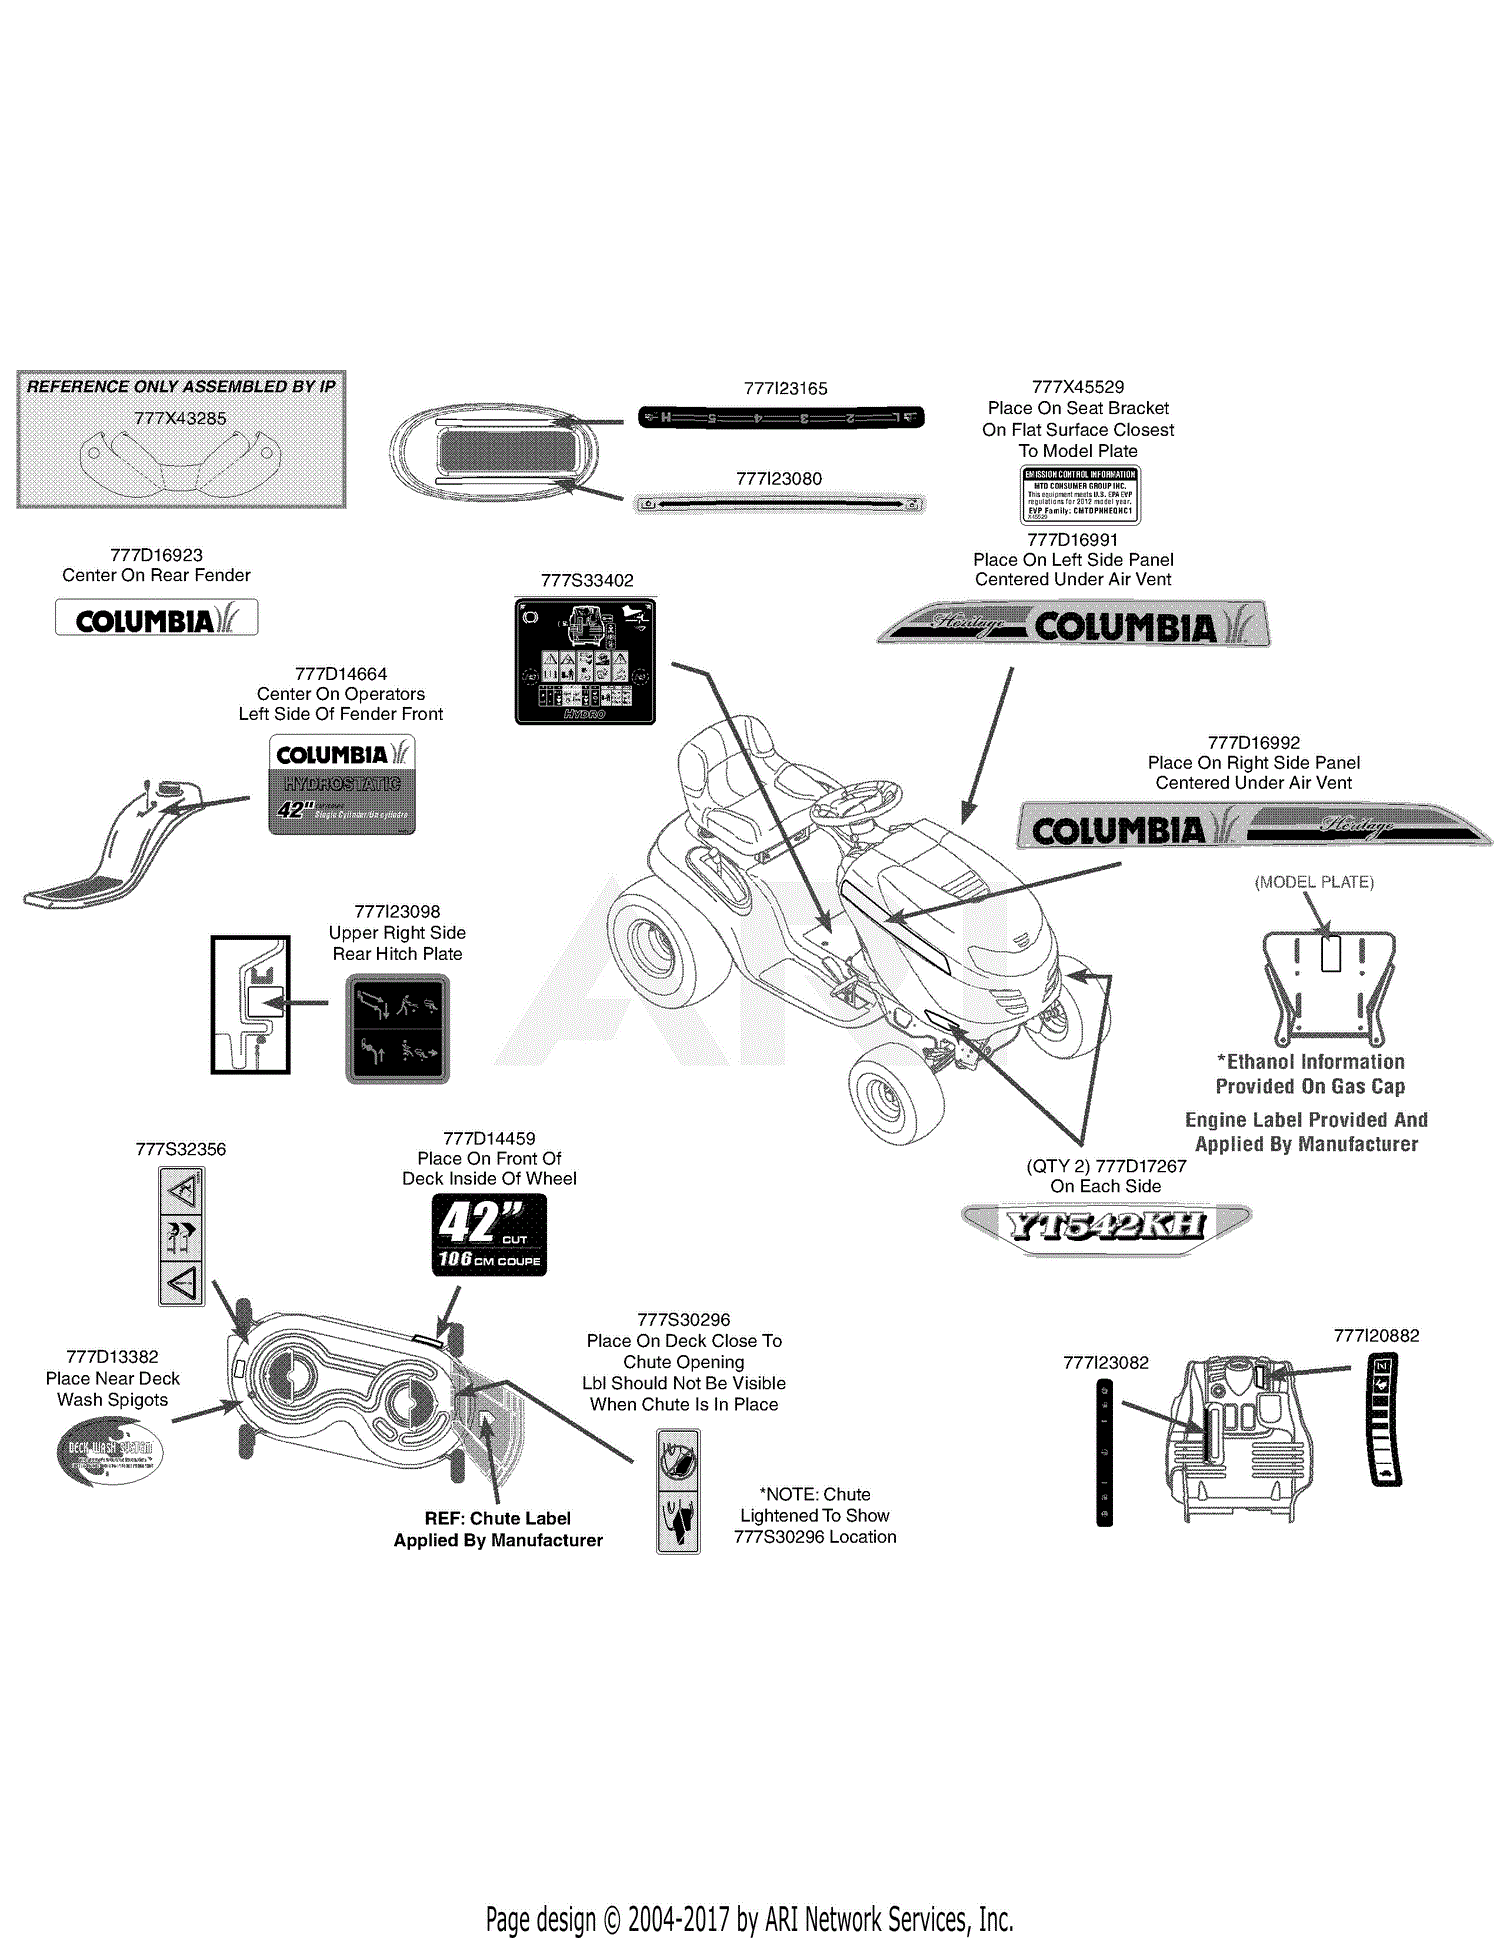 138 014 Mtd Wiring Diagram Full Hd Version Wiring Diagram Marz Diagram Arroccoturicchi It